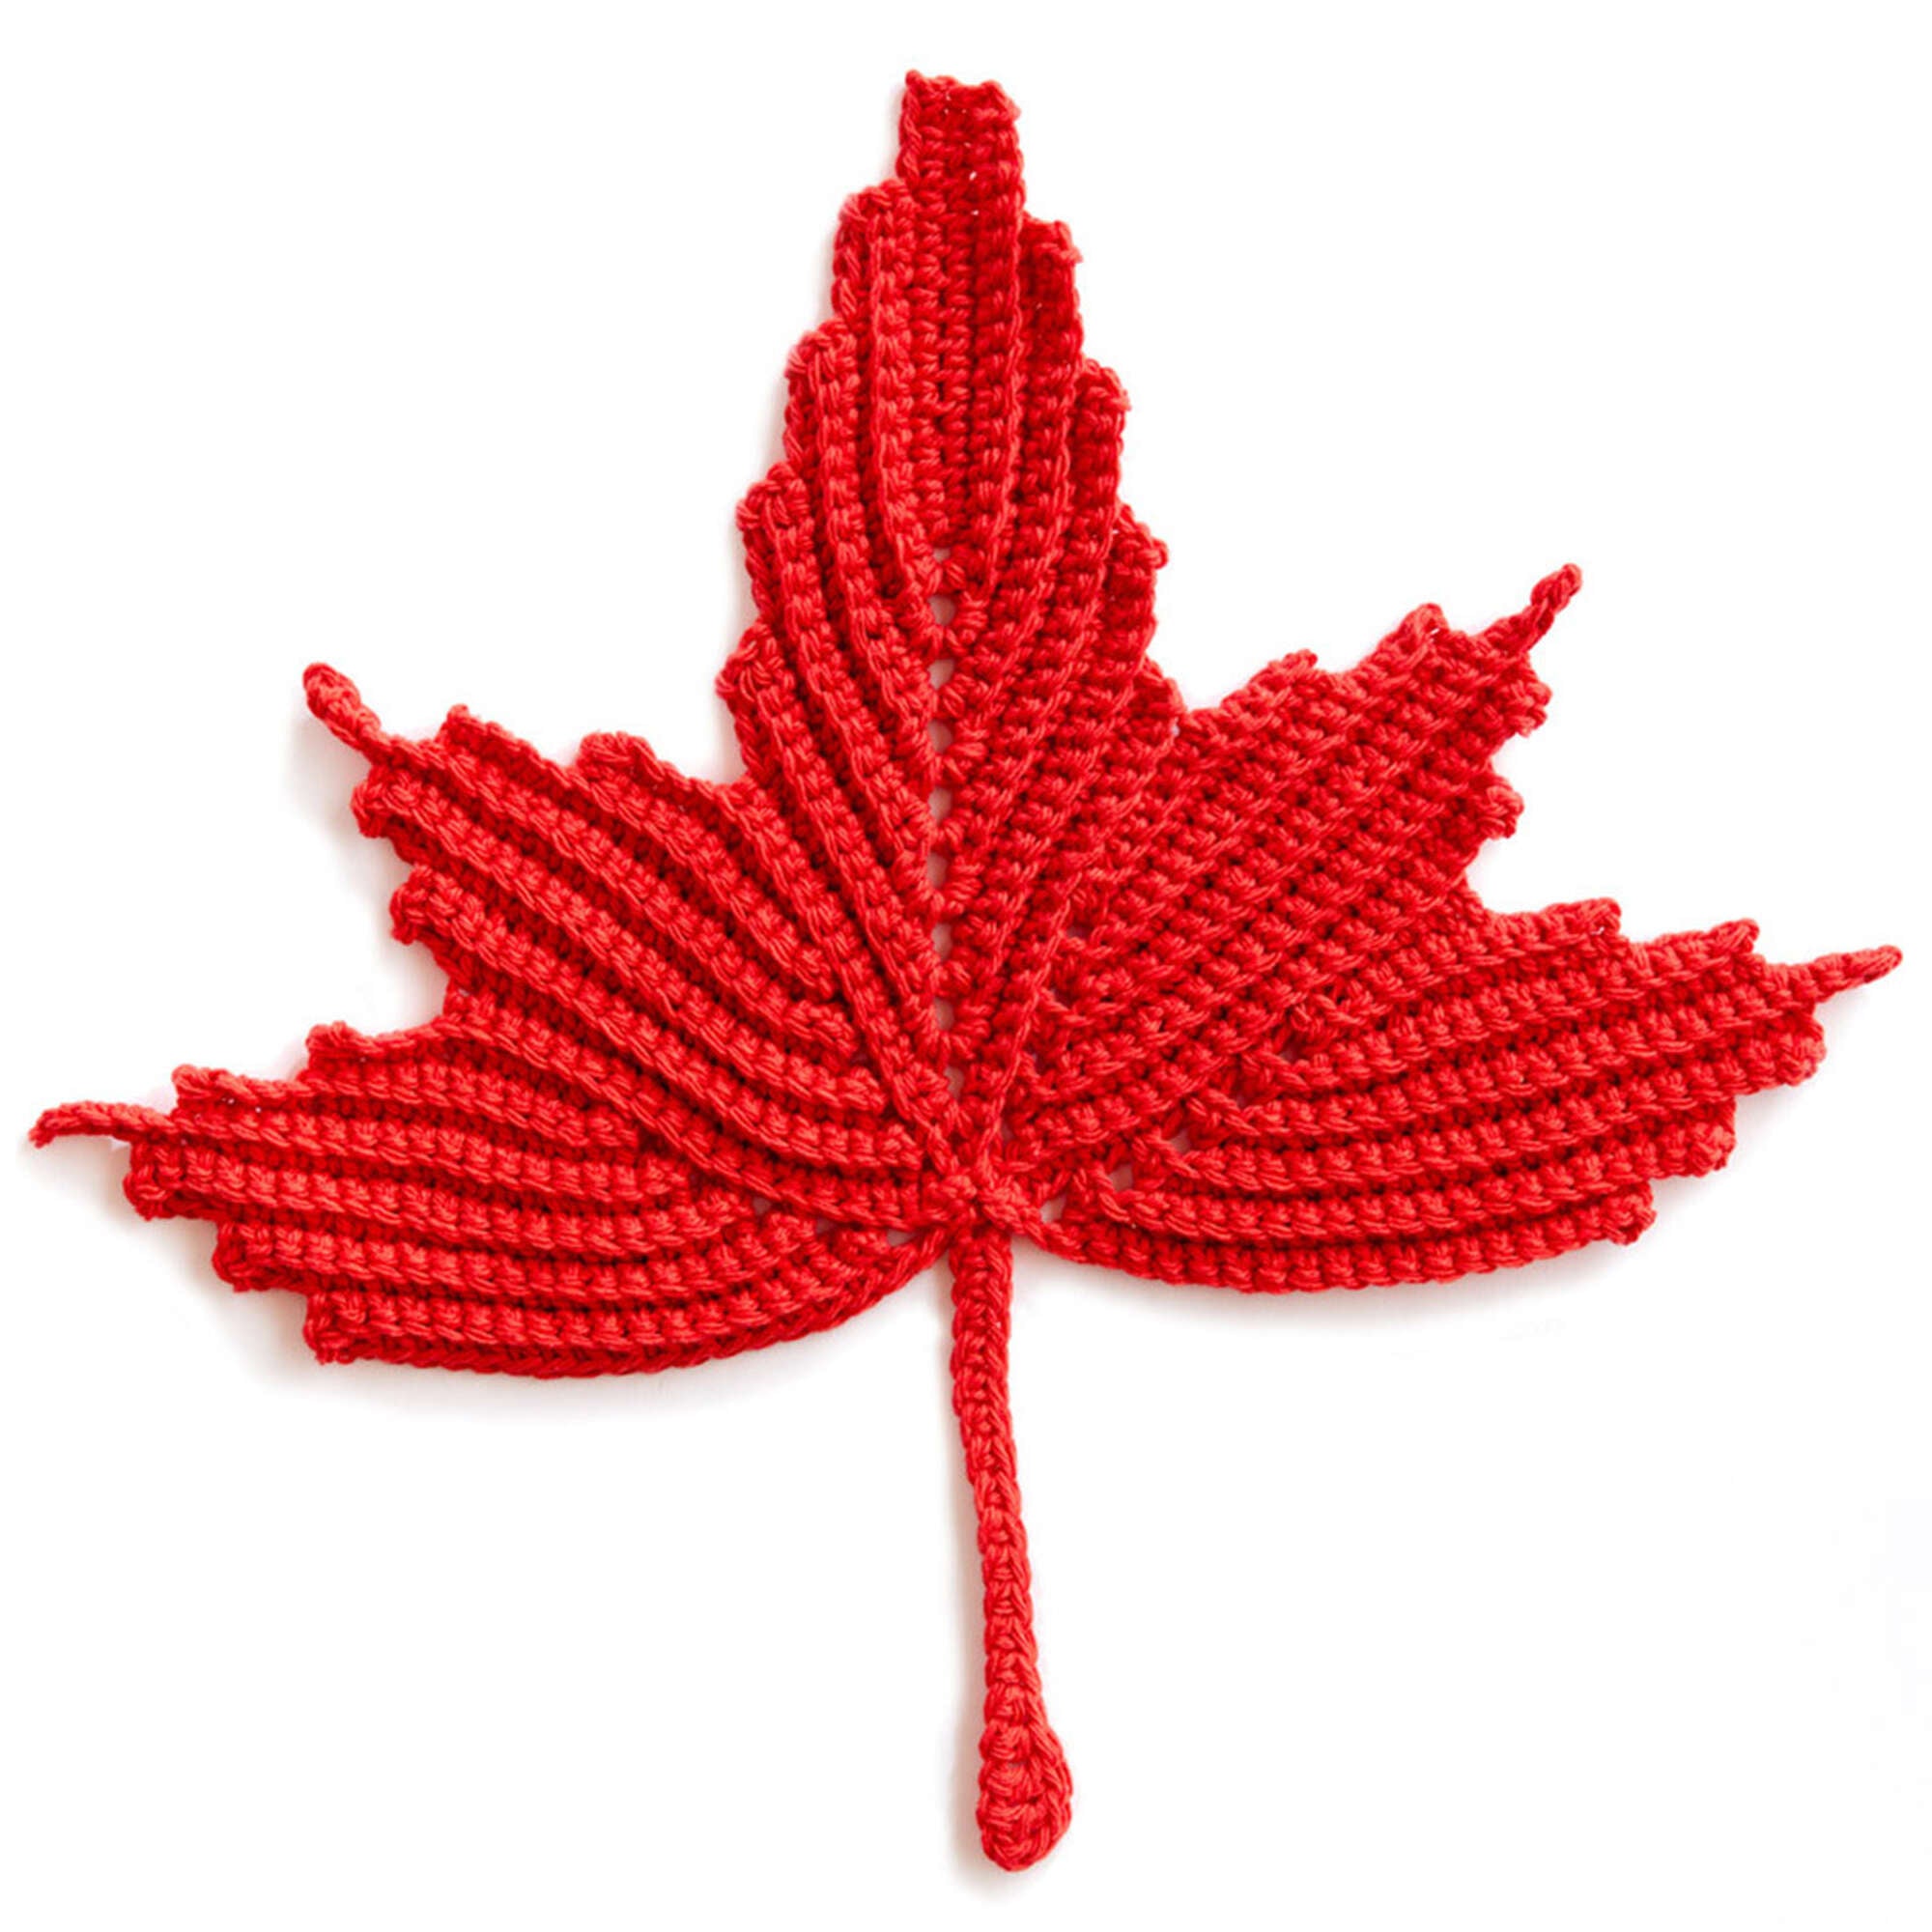 Bernat Maple Leaf Crochet Dishcloth | Yarnspirations